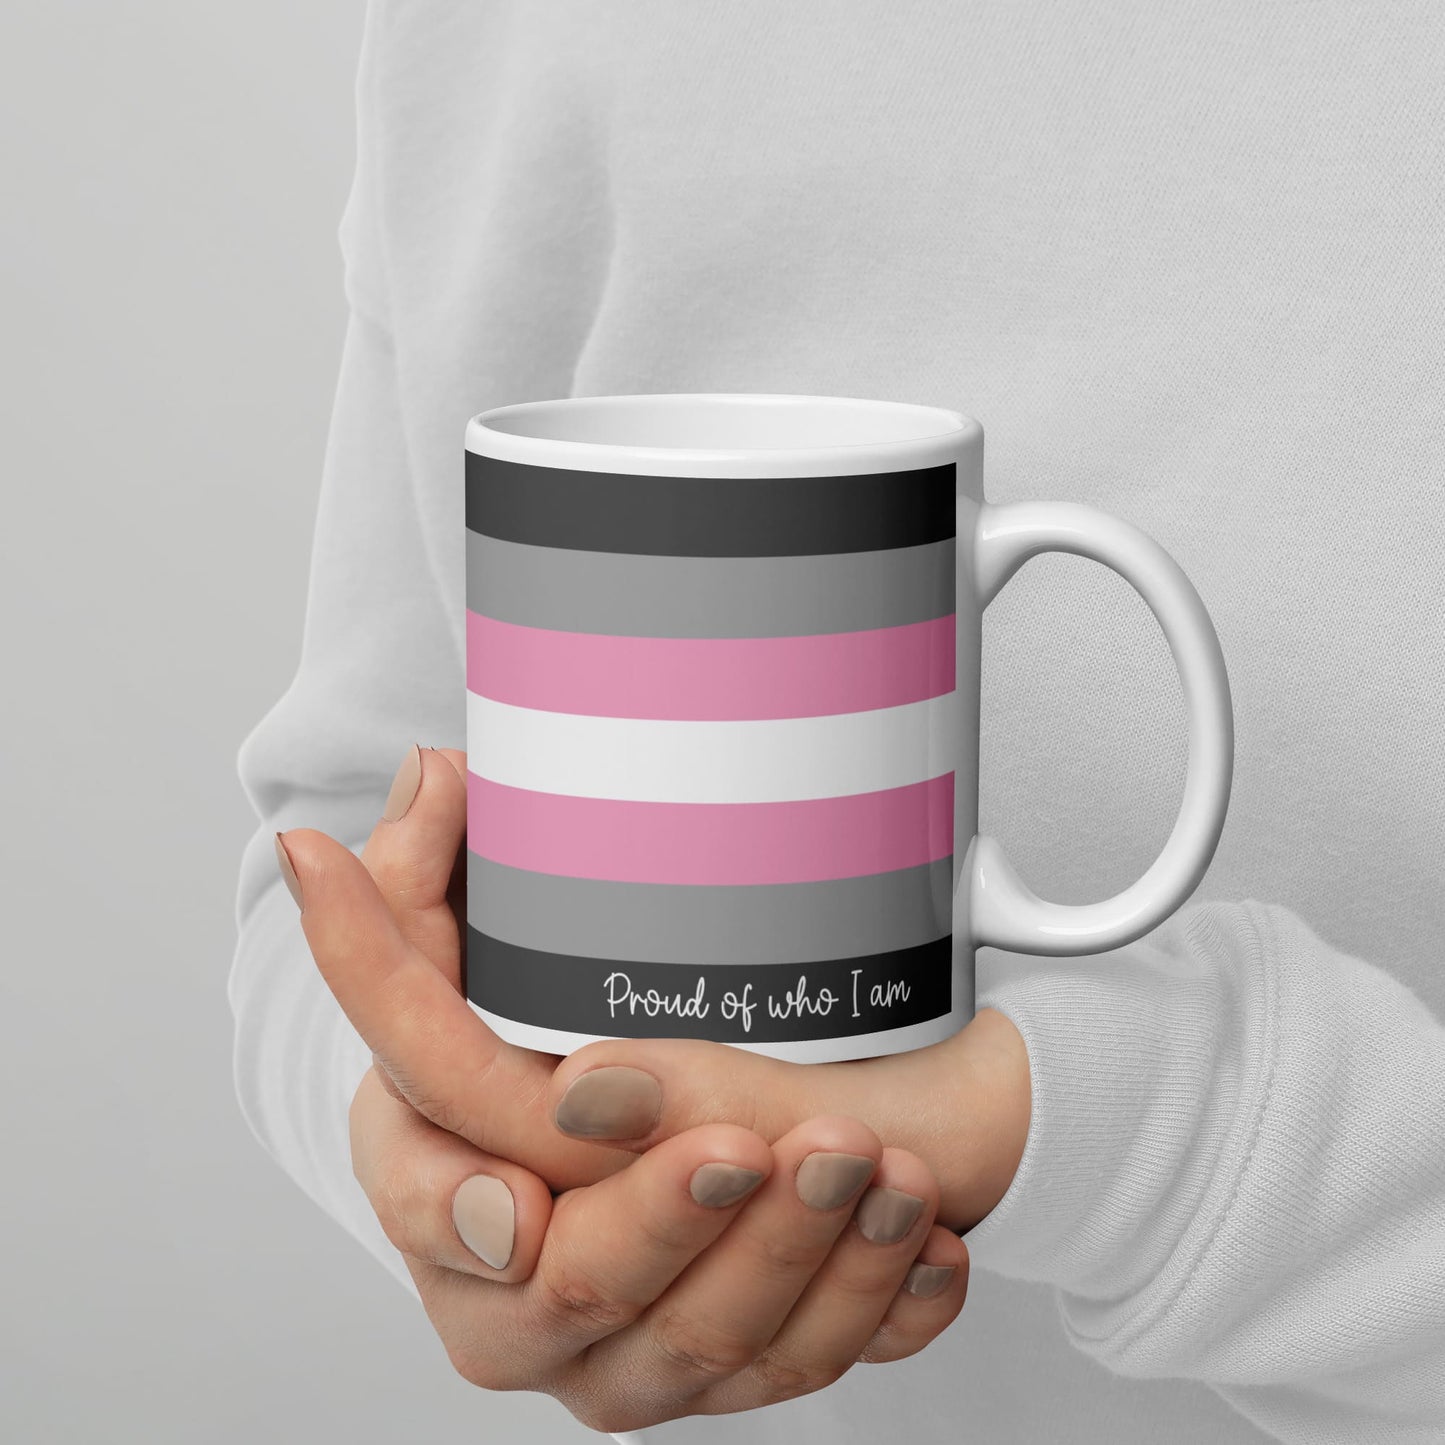 demigirl coffee mug on hands